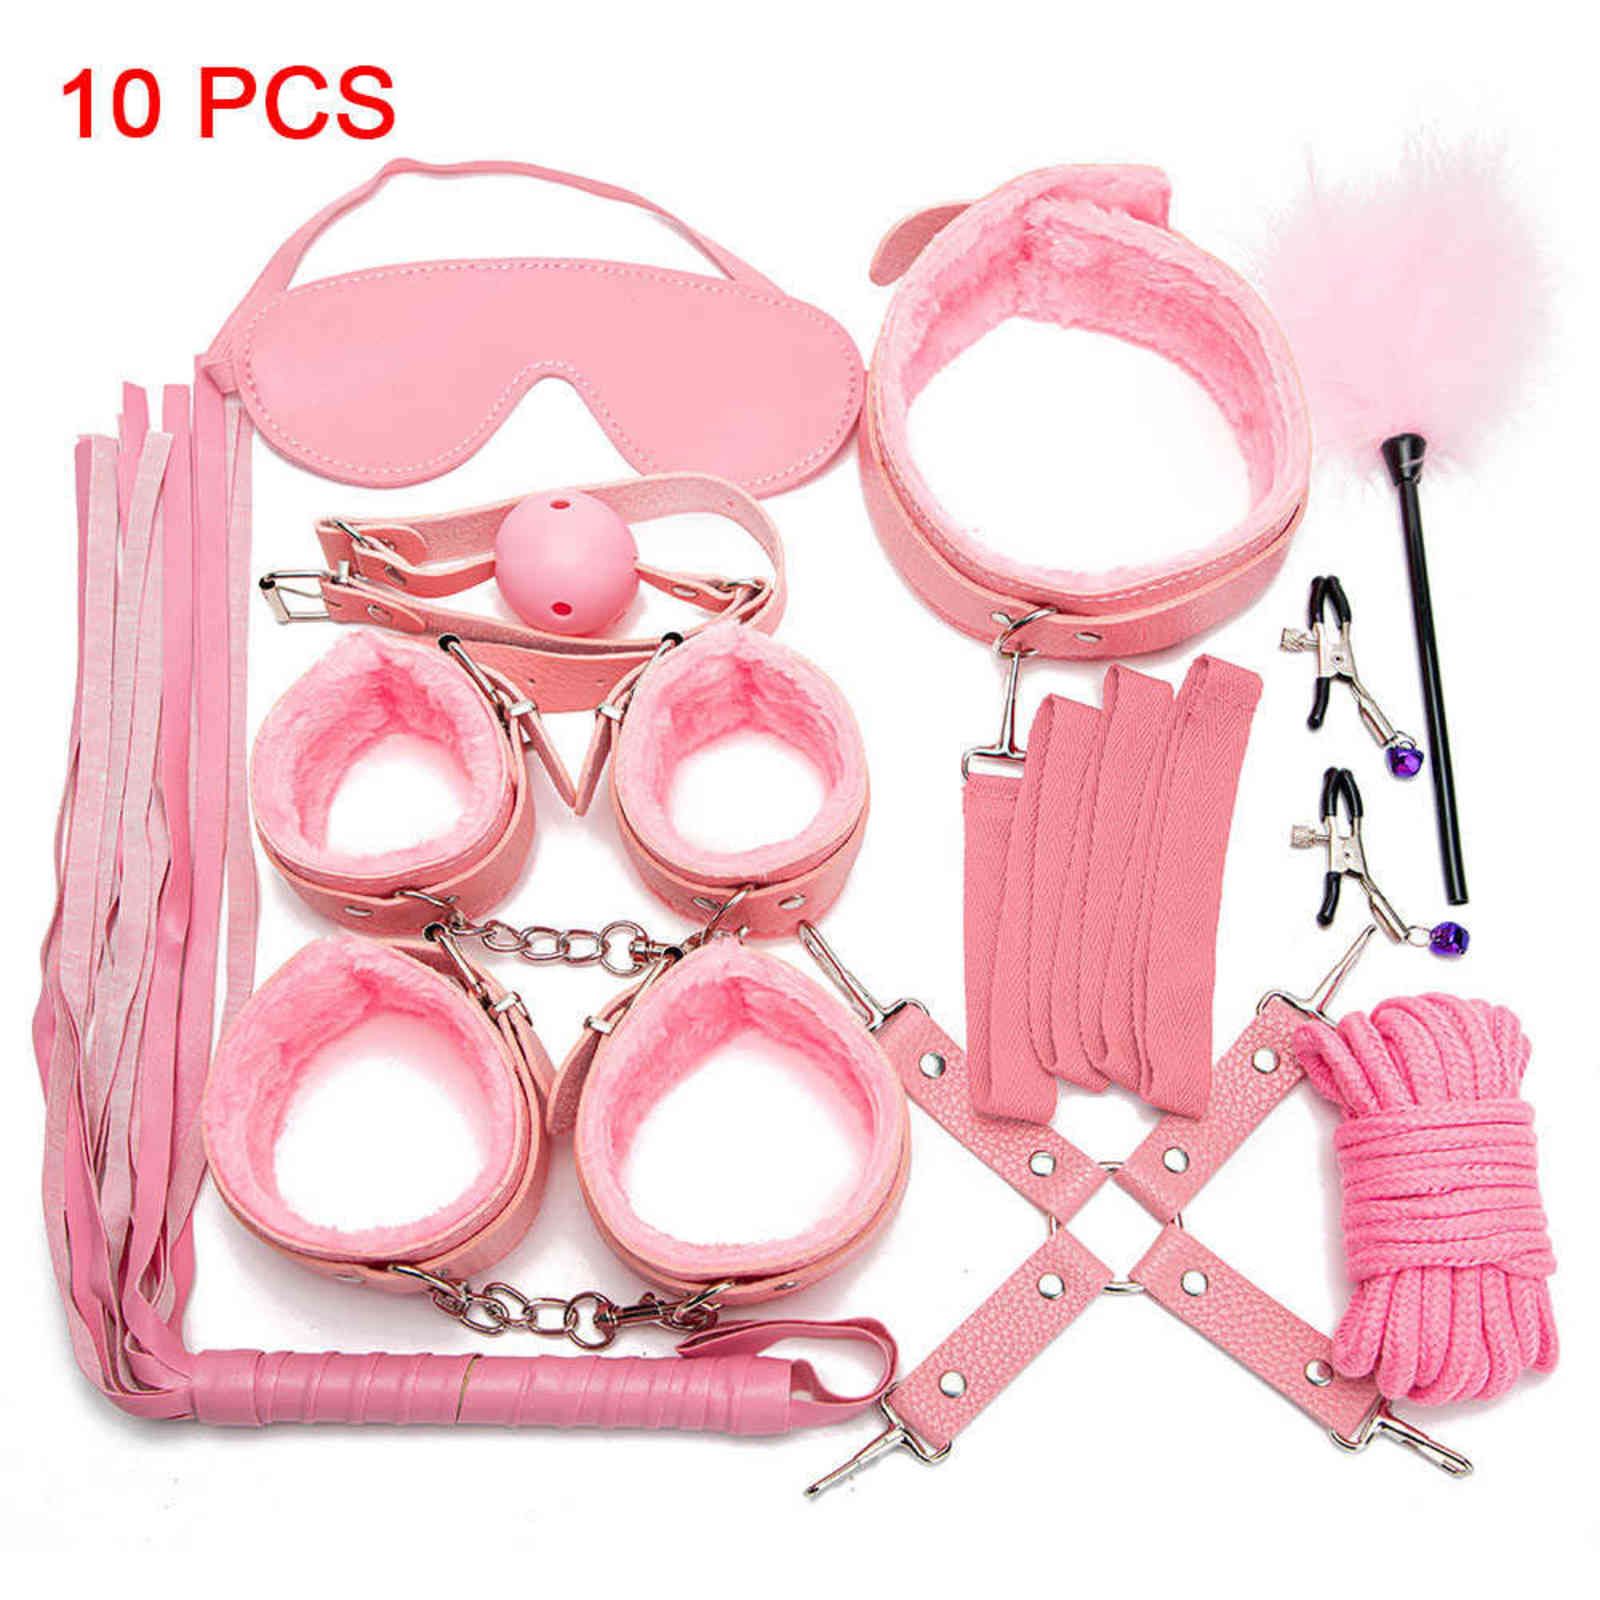 10 Pink Bdsm Set